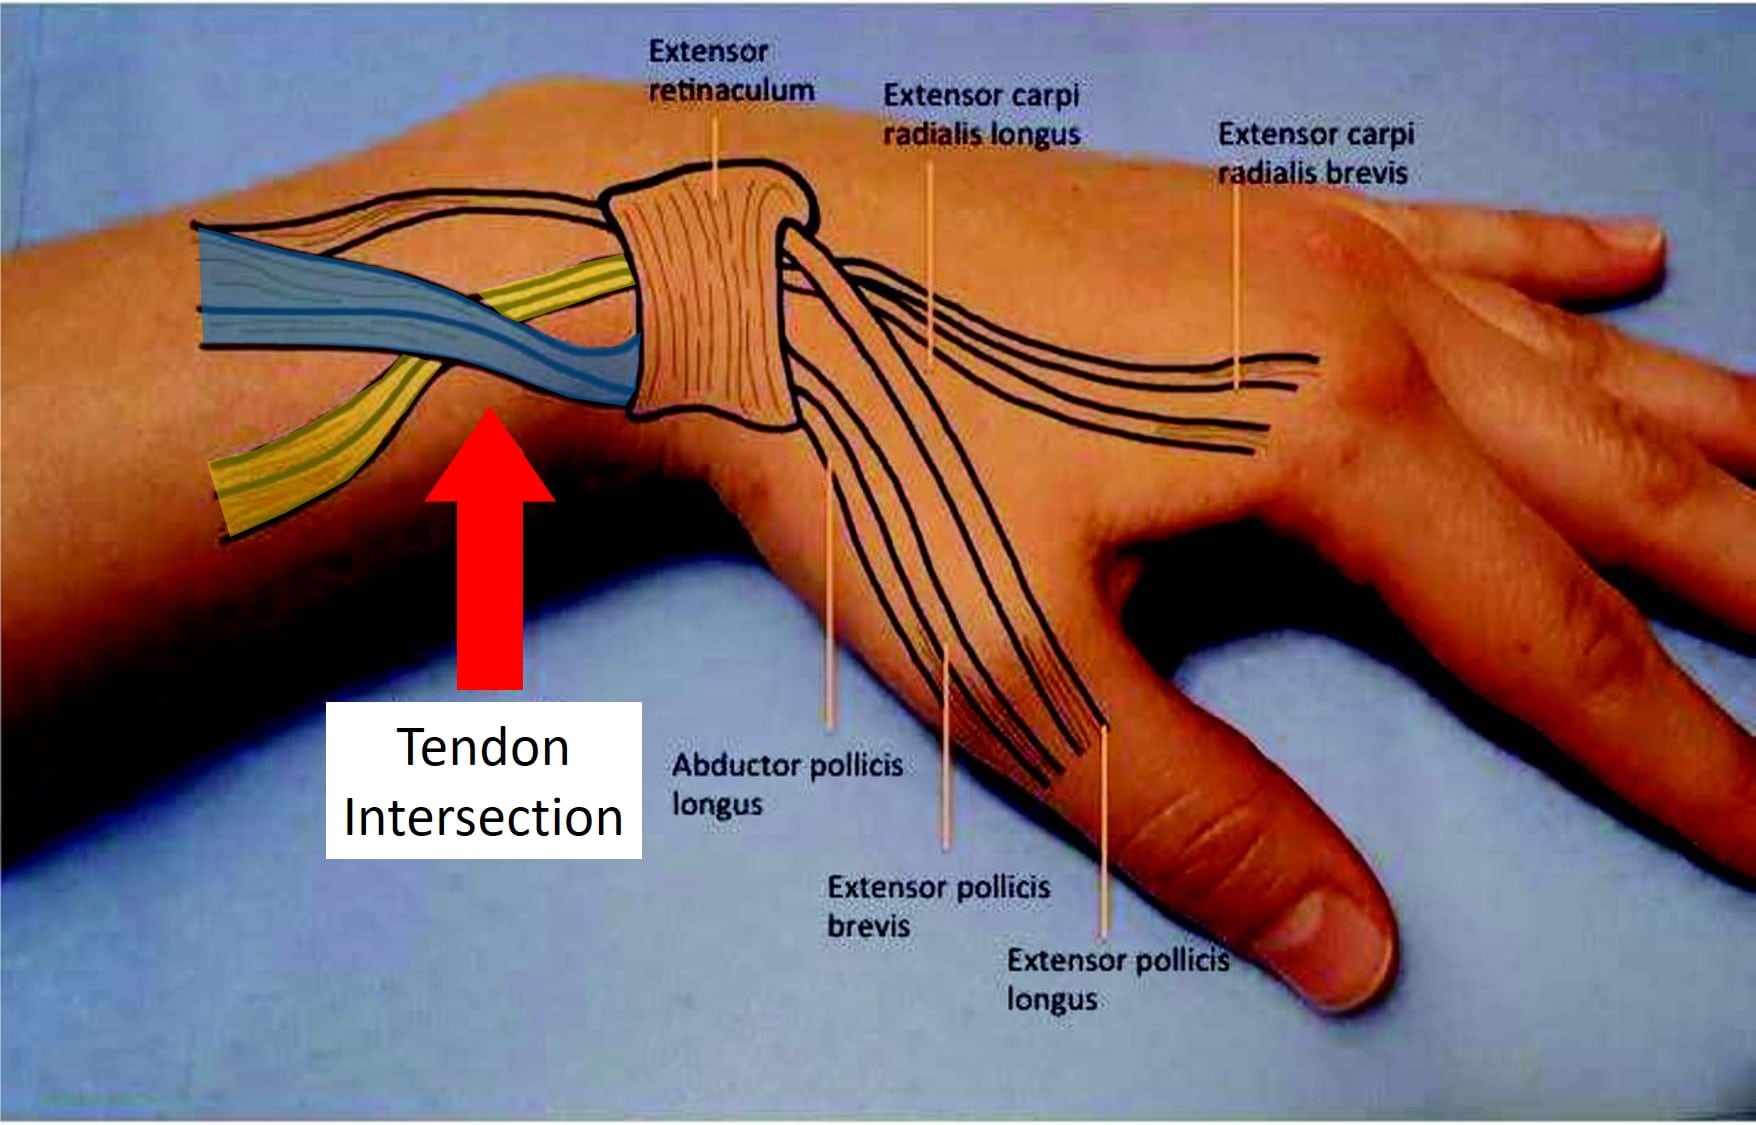 Как расположены сухожилия на пальцах рук фото